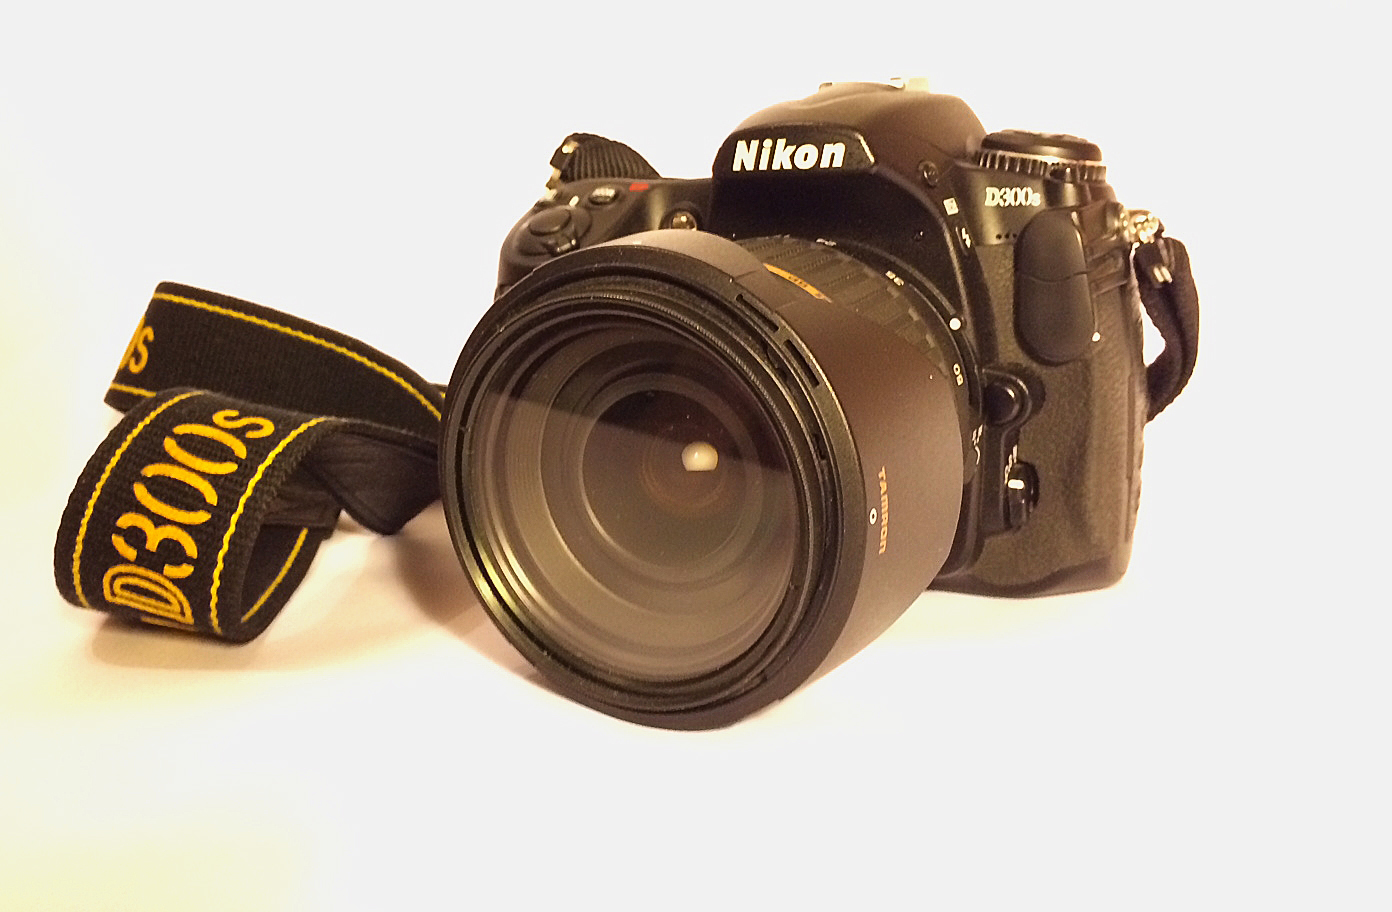  Satılık Nikon D300s + Tamron 17-50mm f2.8 (detaylı fotoğraflı) 2899 TL